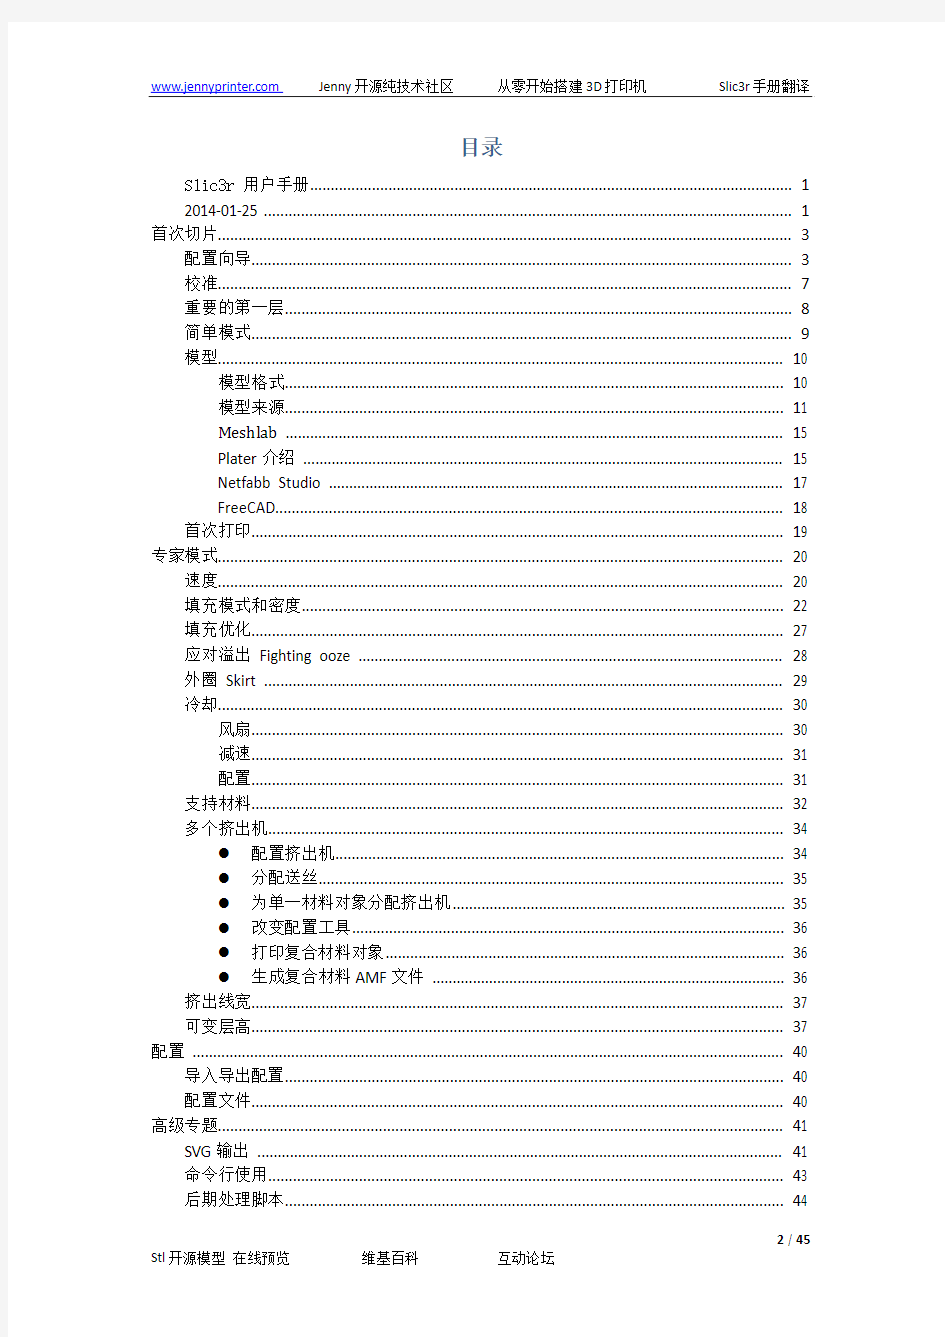 Slic3r切片中文使用手册